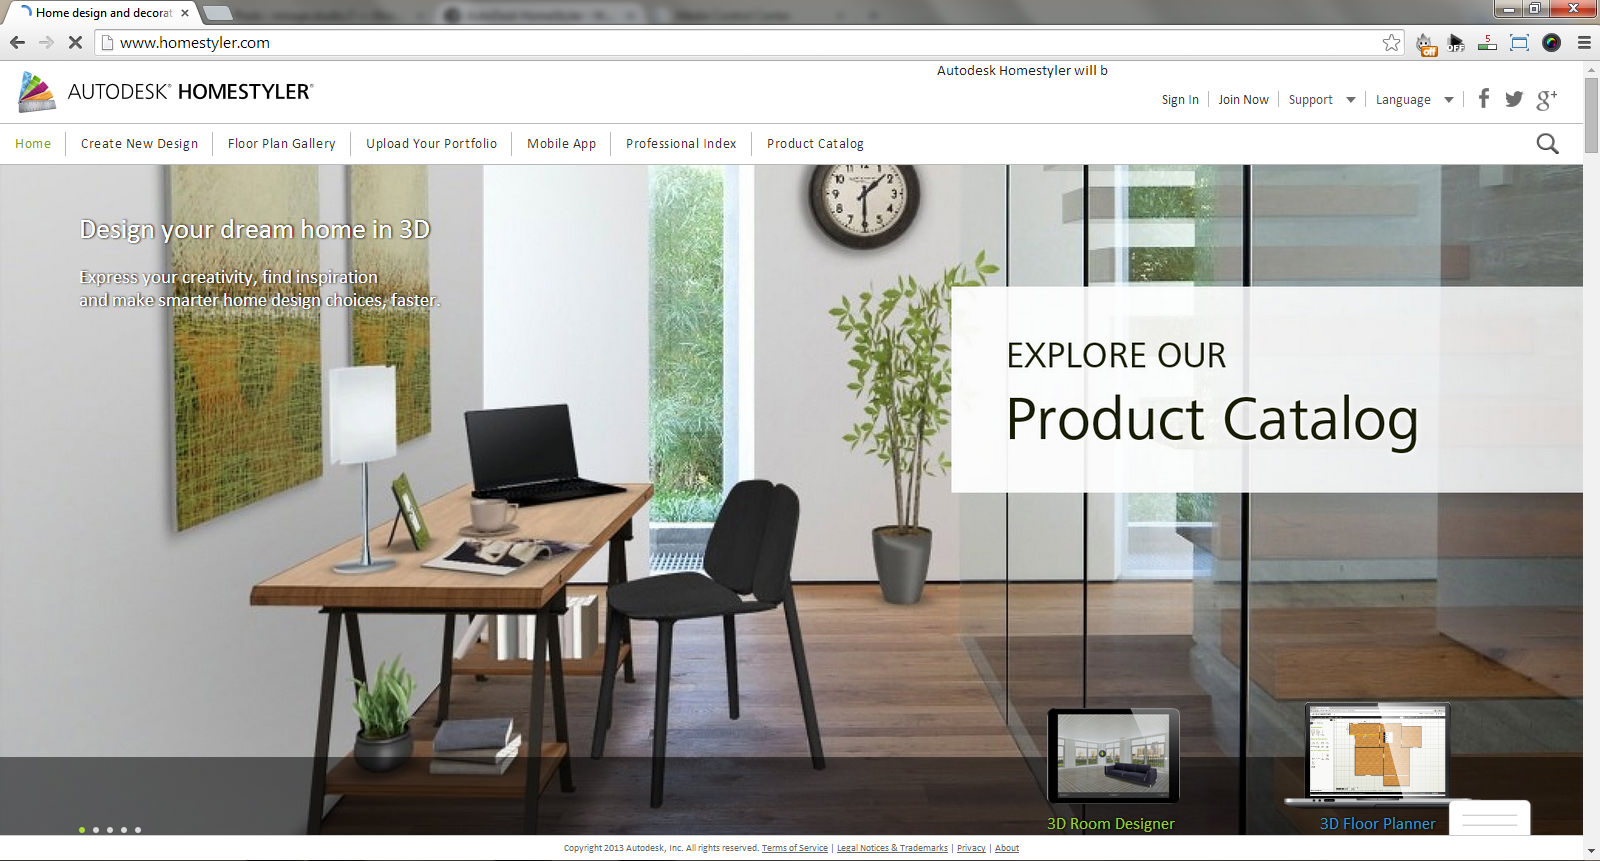 Interior Home Design Software Free on Free Online Home Design Software To Create And Share Home Design